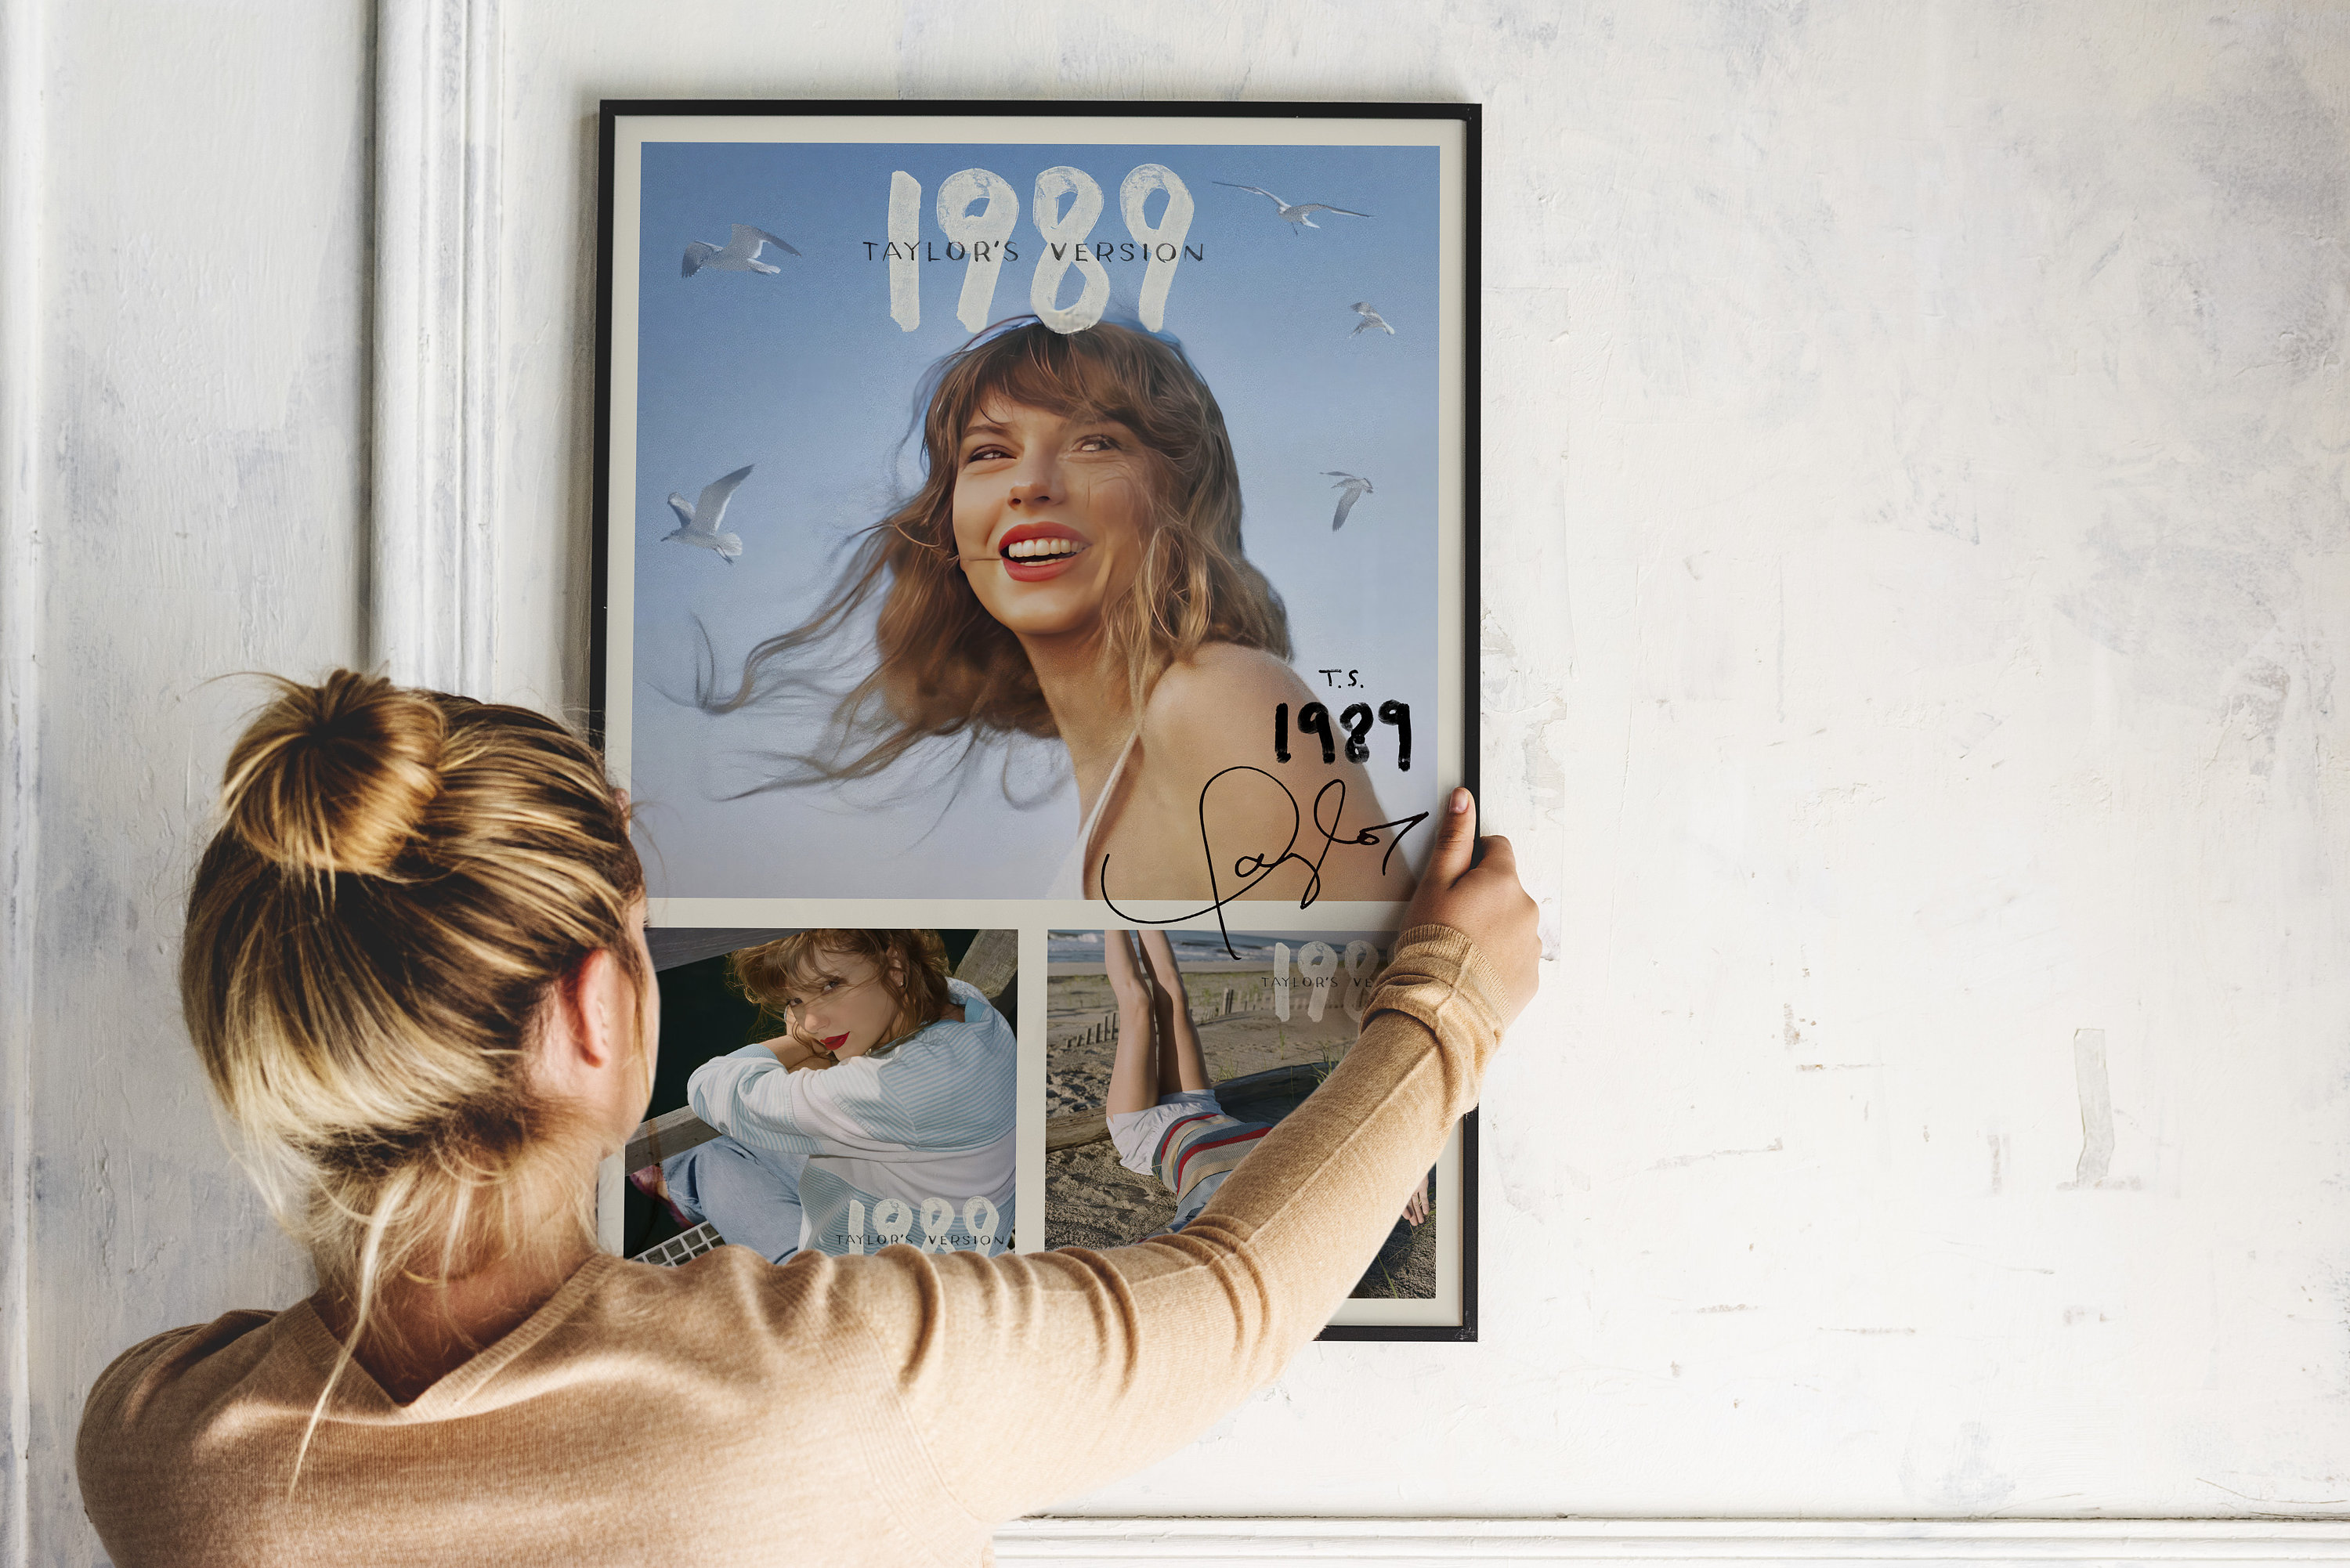 Taylor Poster, Taylor version 1989